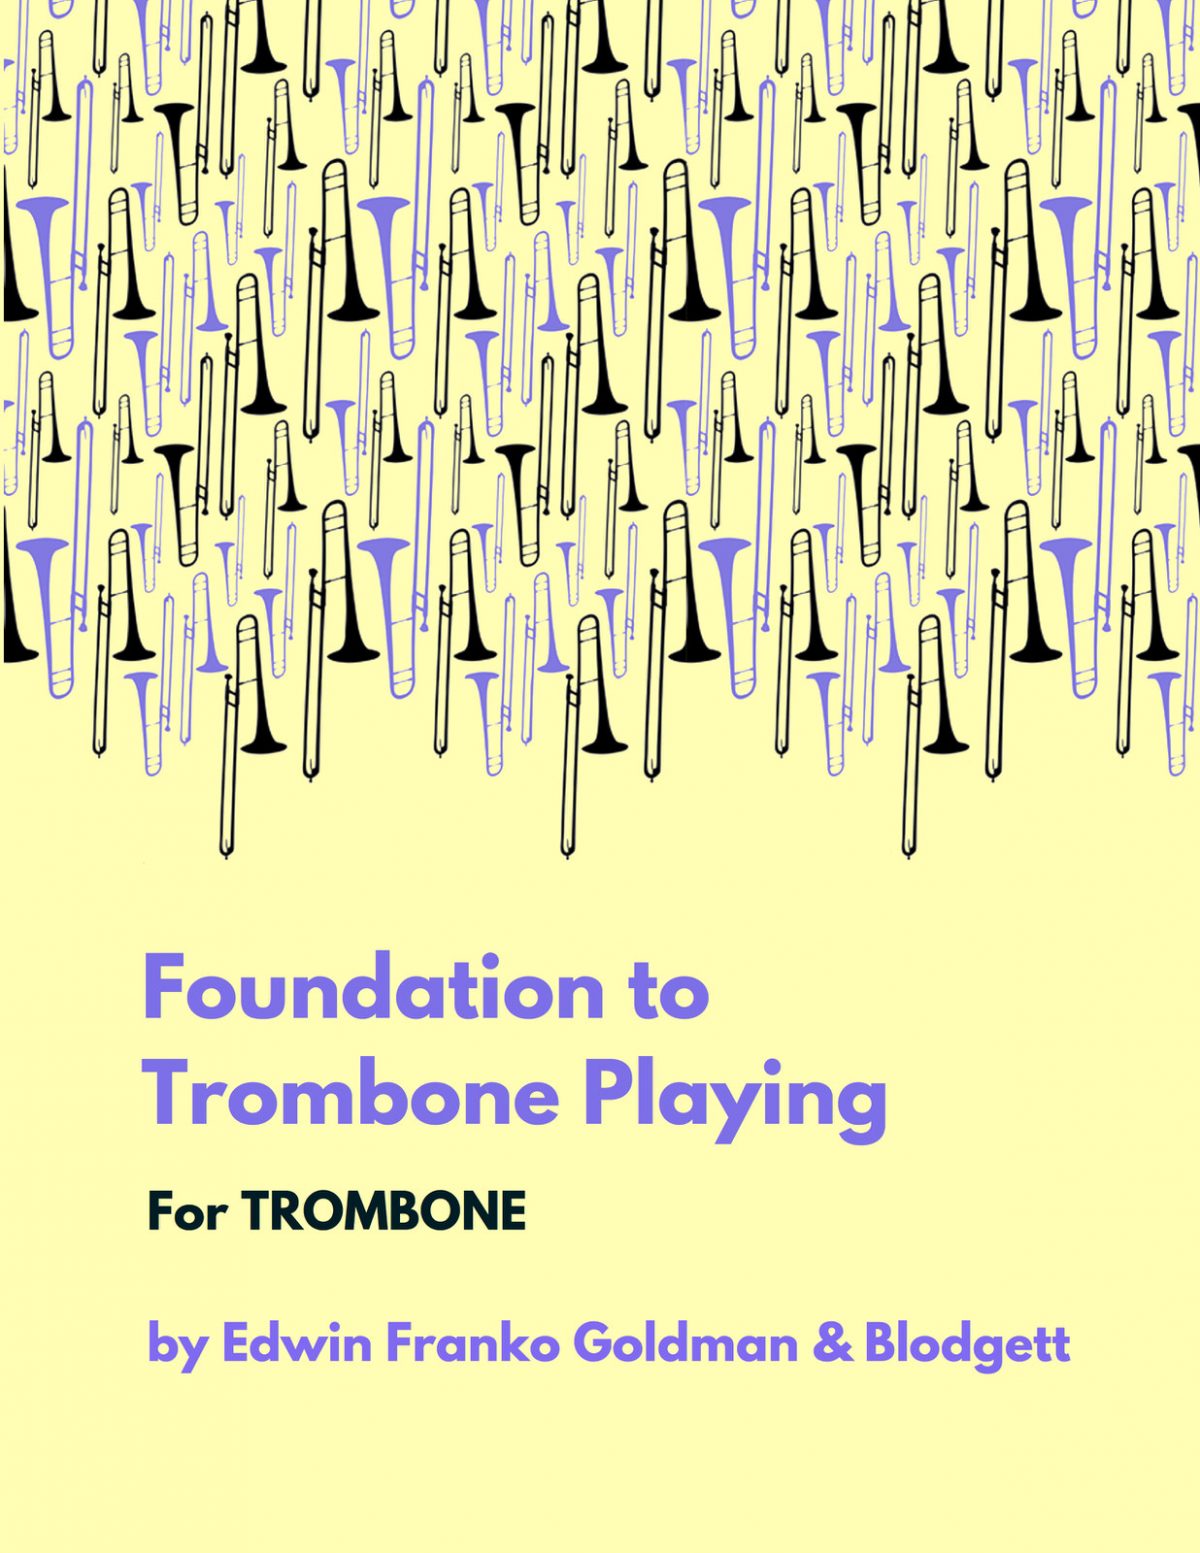 Goldman, Blodgett, Foundation to Trombone Playing